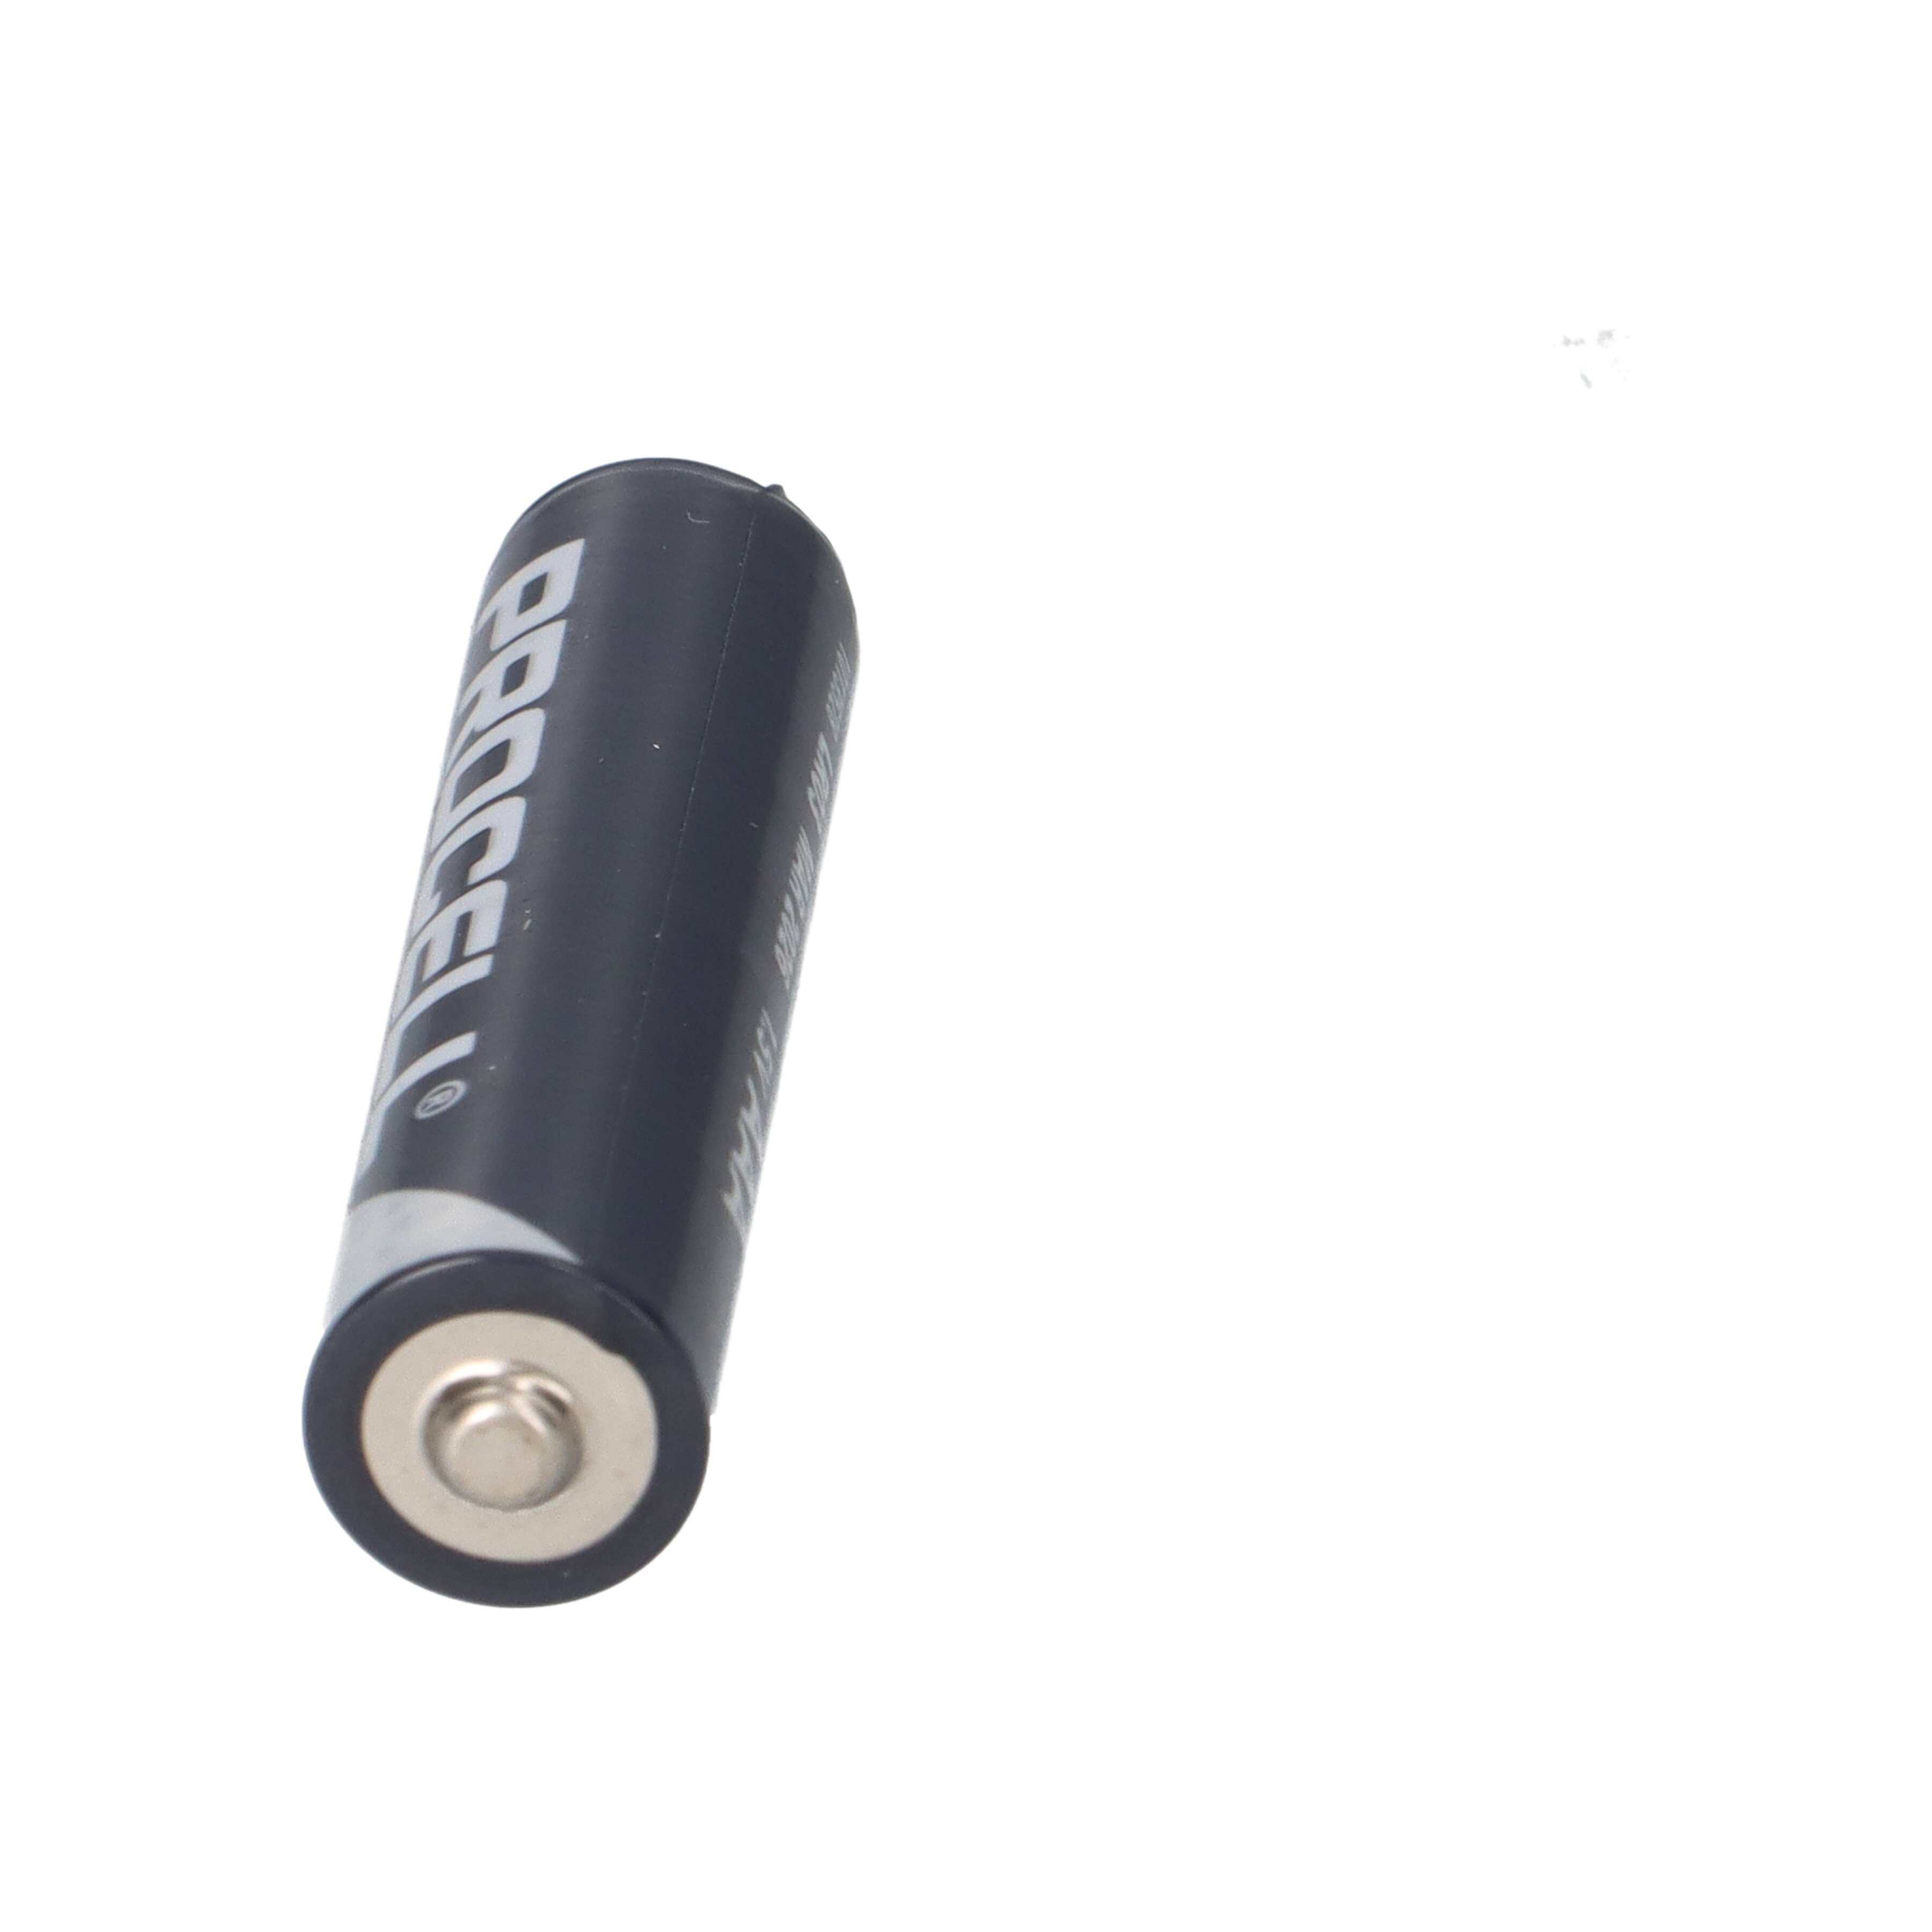 Duracell Duracell Procell MN2400 Micro Batterie Batterie Alkaline AAA